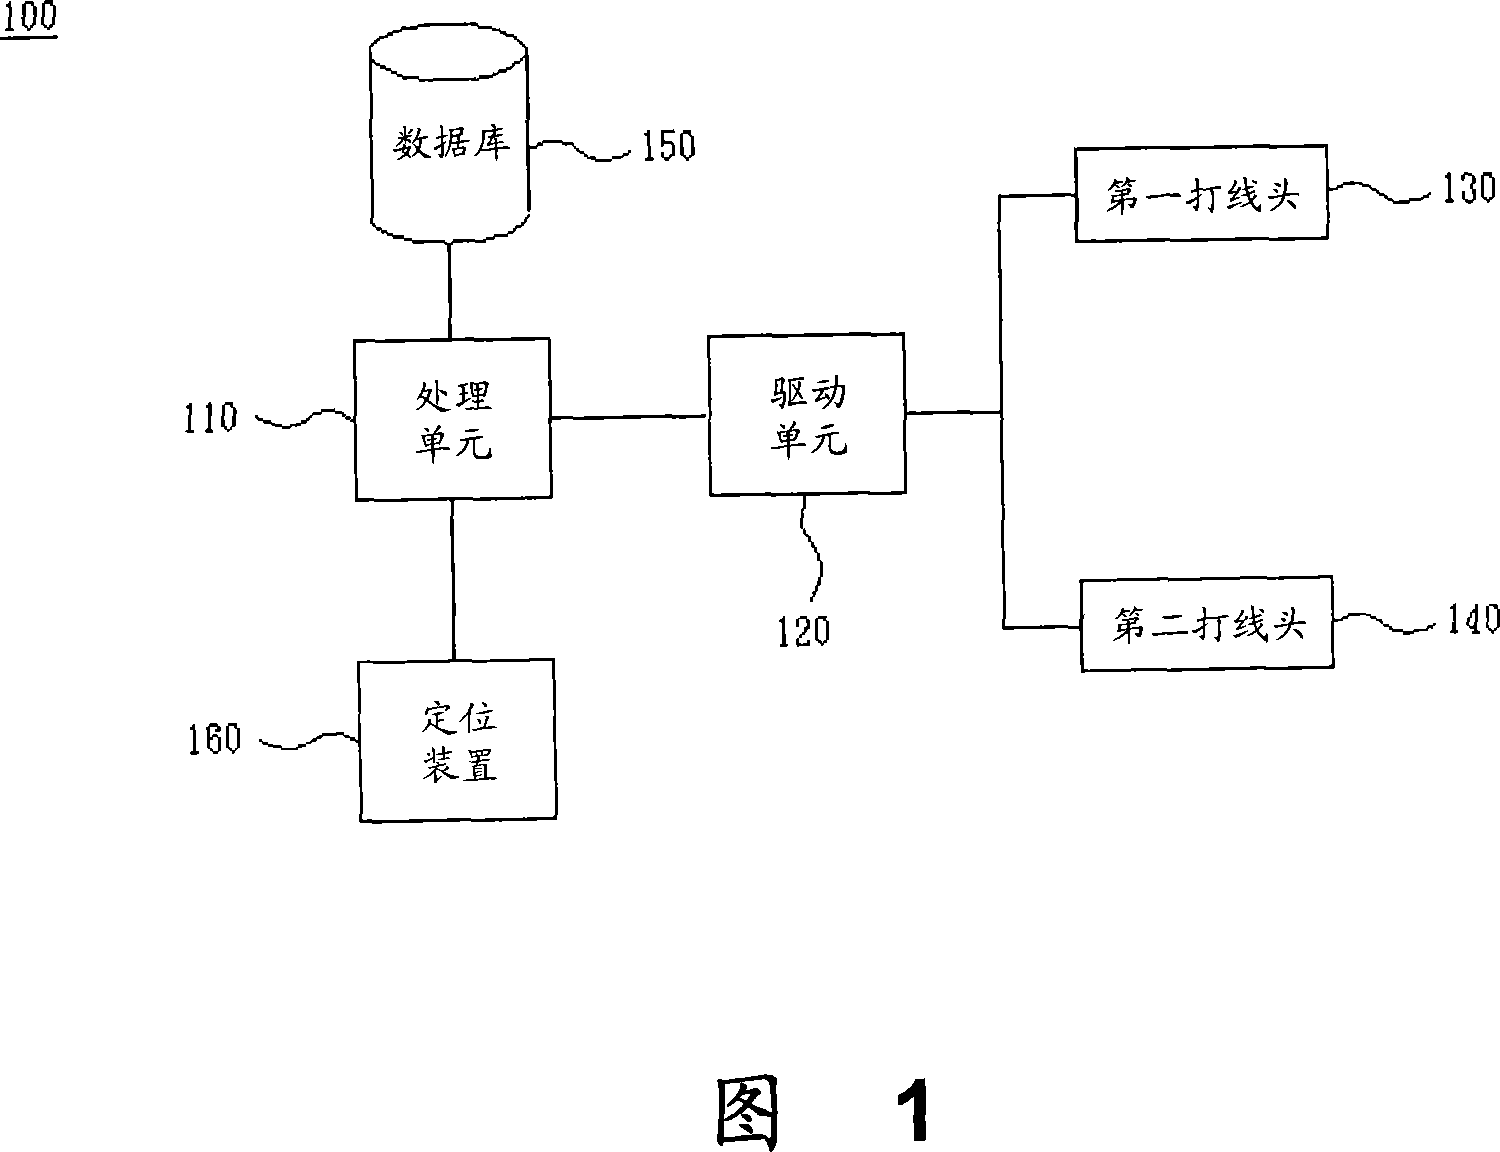 Wiring machine platform and wiring method